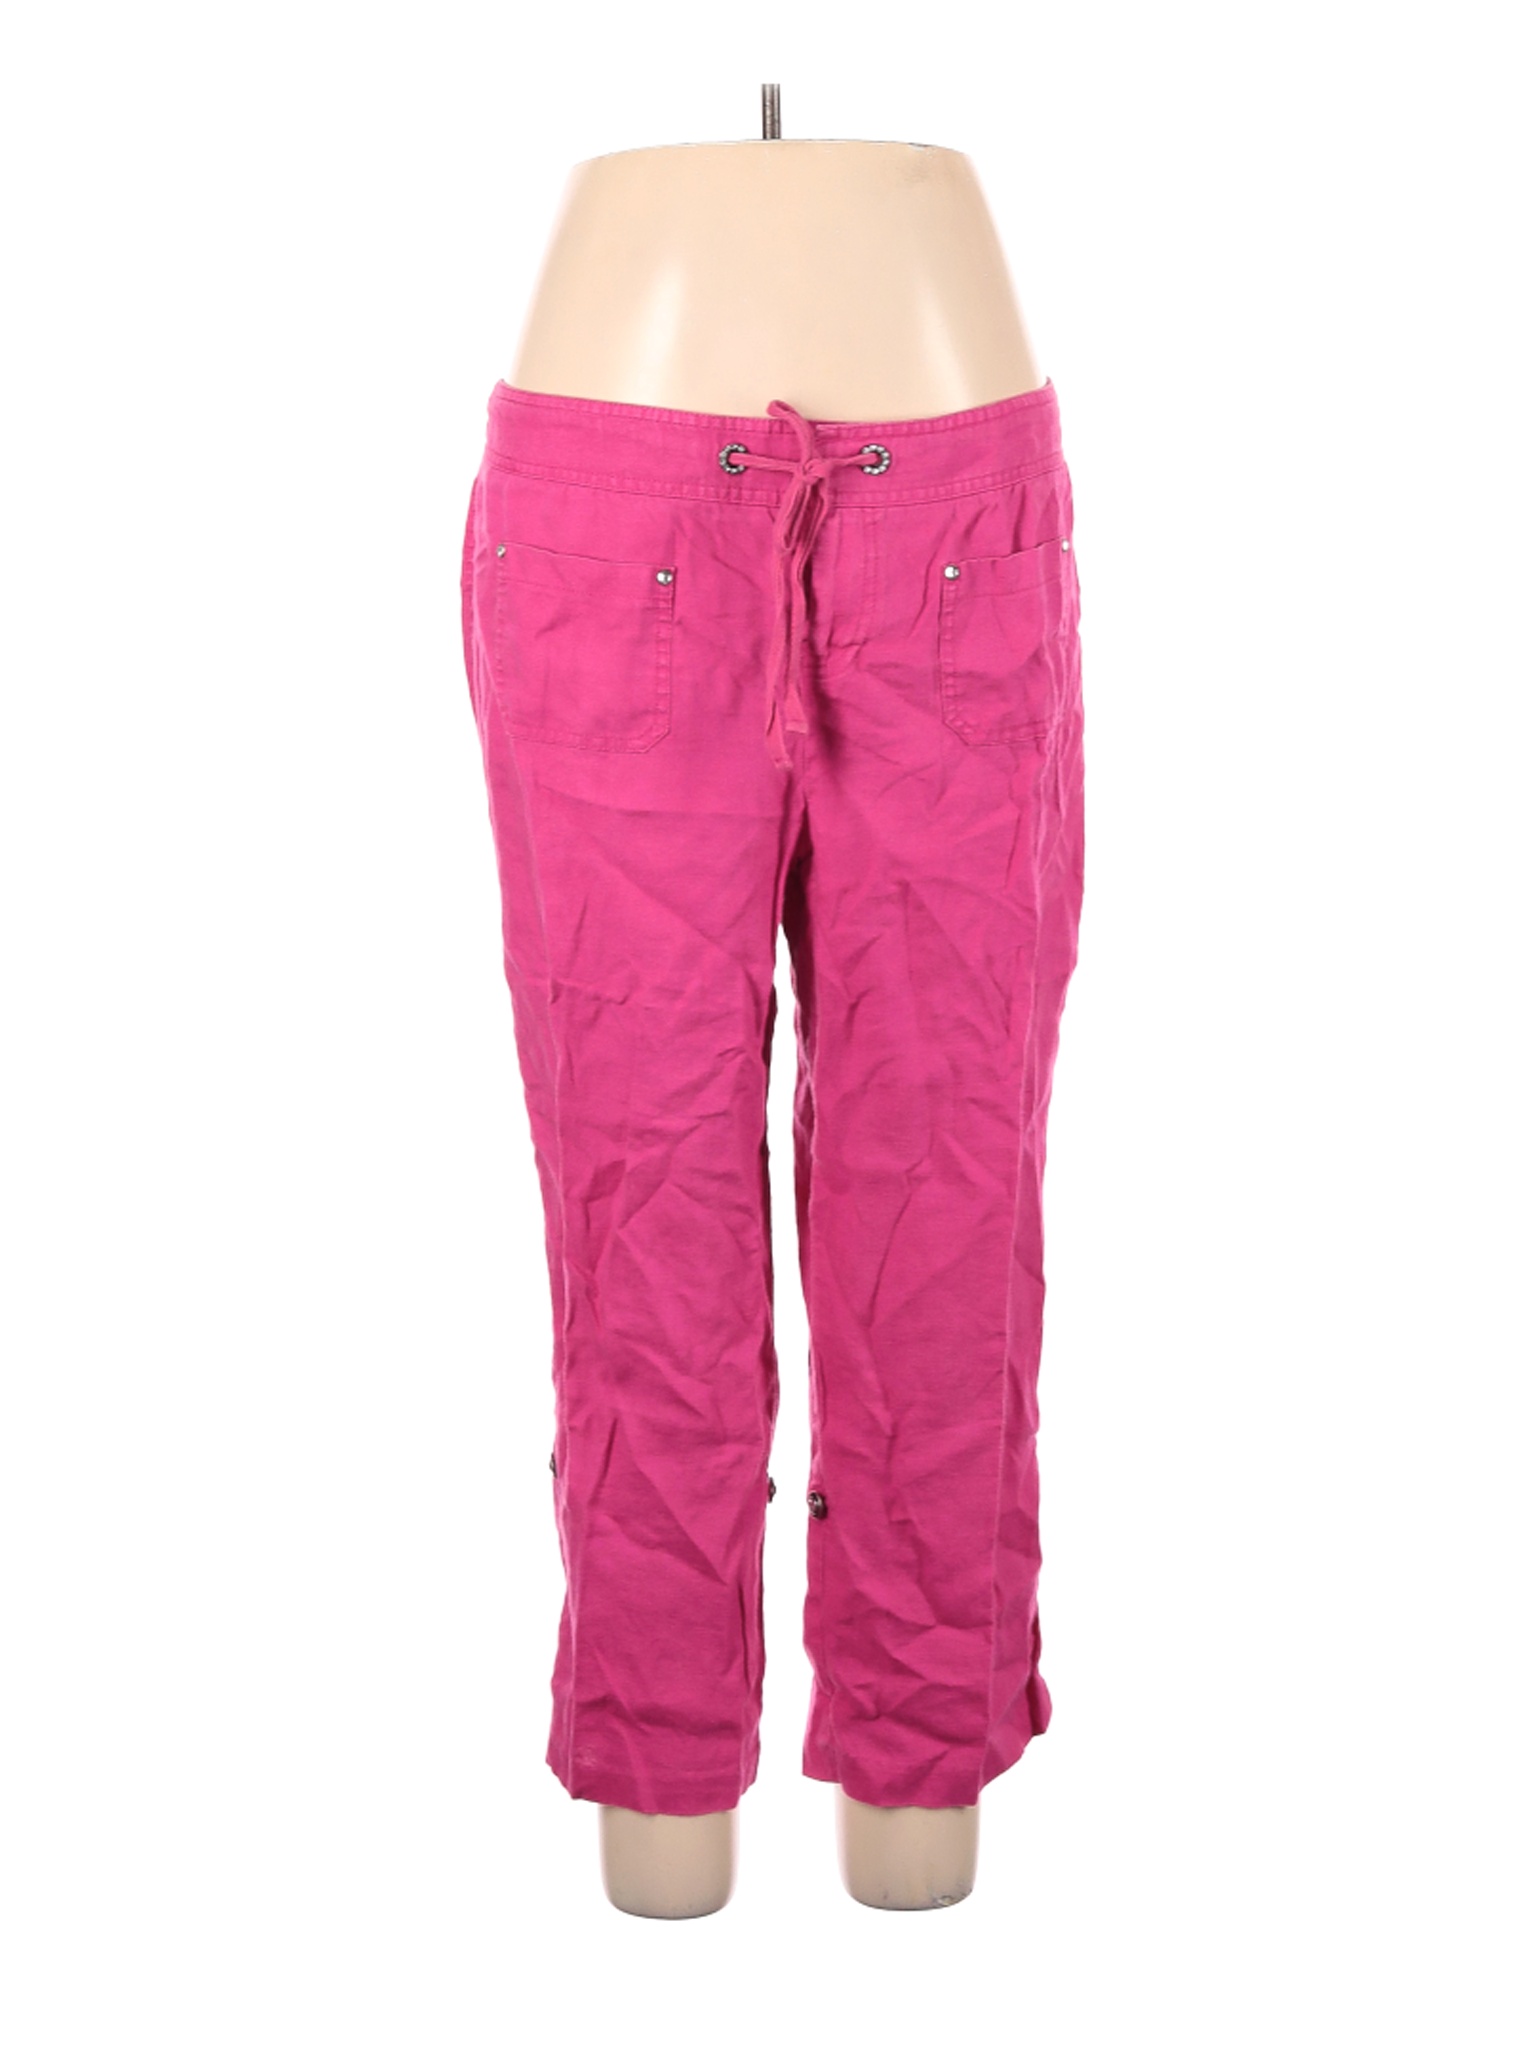 INC International Concepts Women Pink Linen Pants 16 | eBay